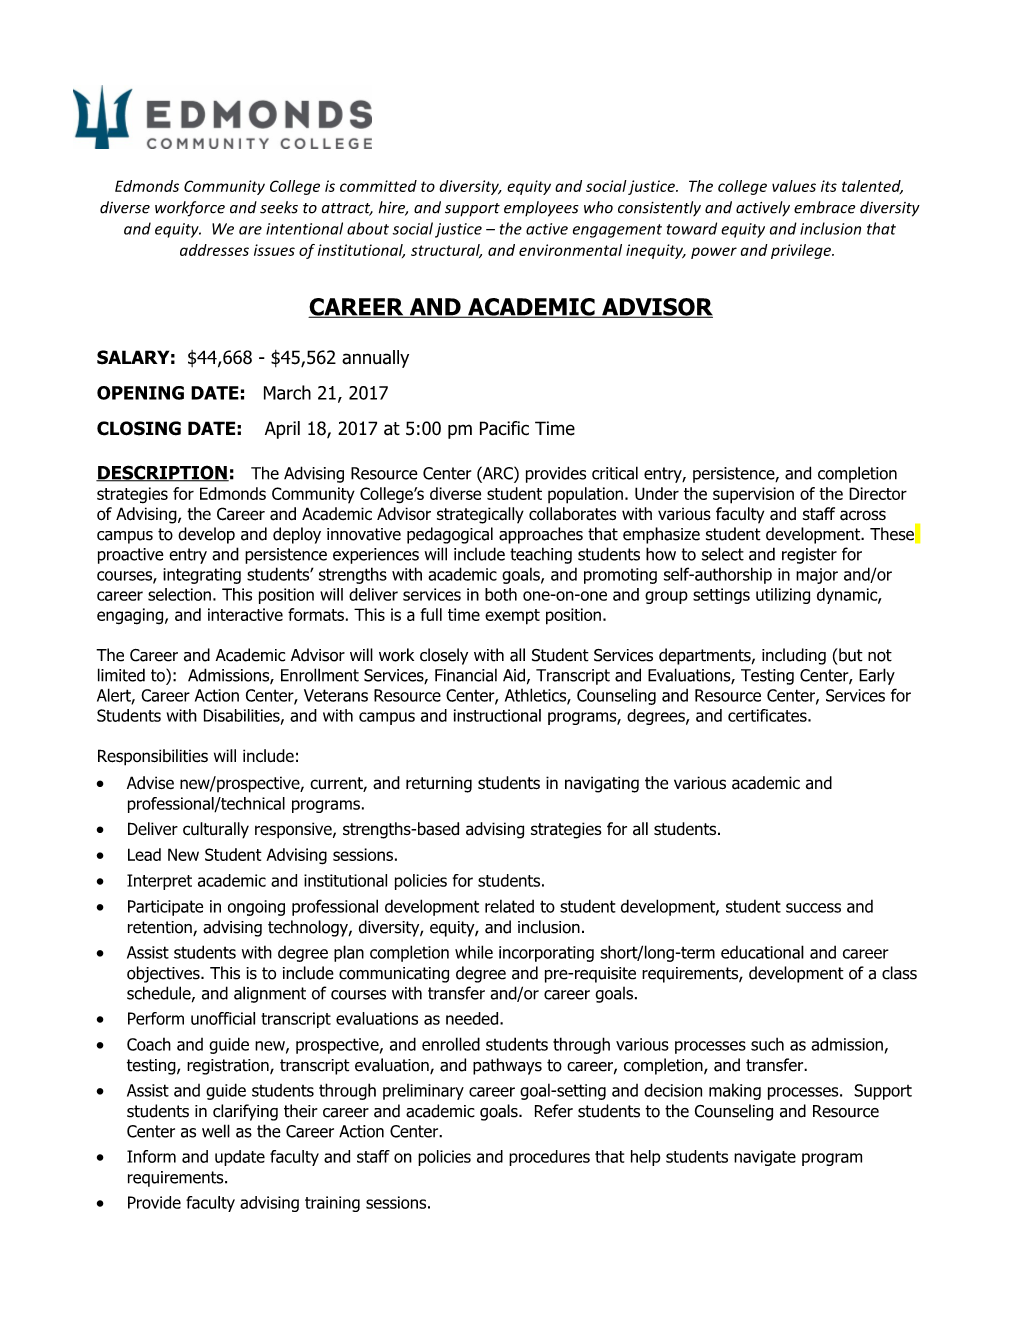 Career and Academic Advisor